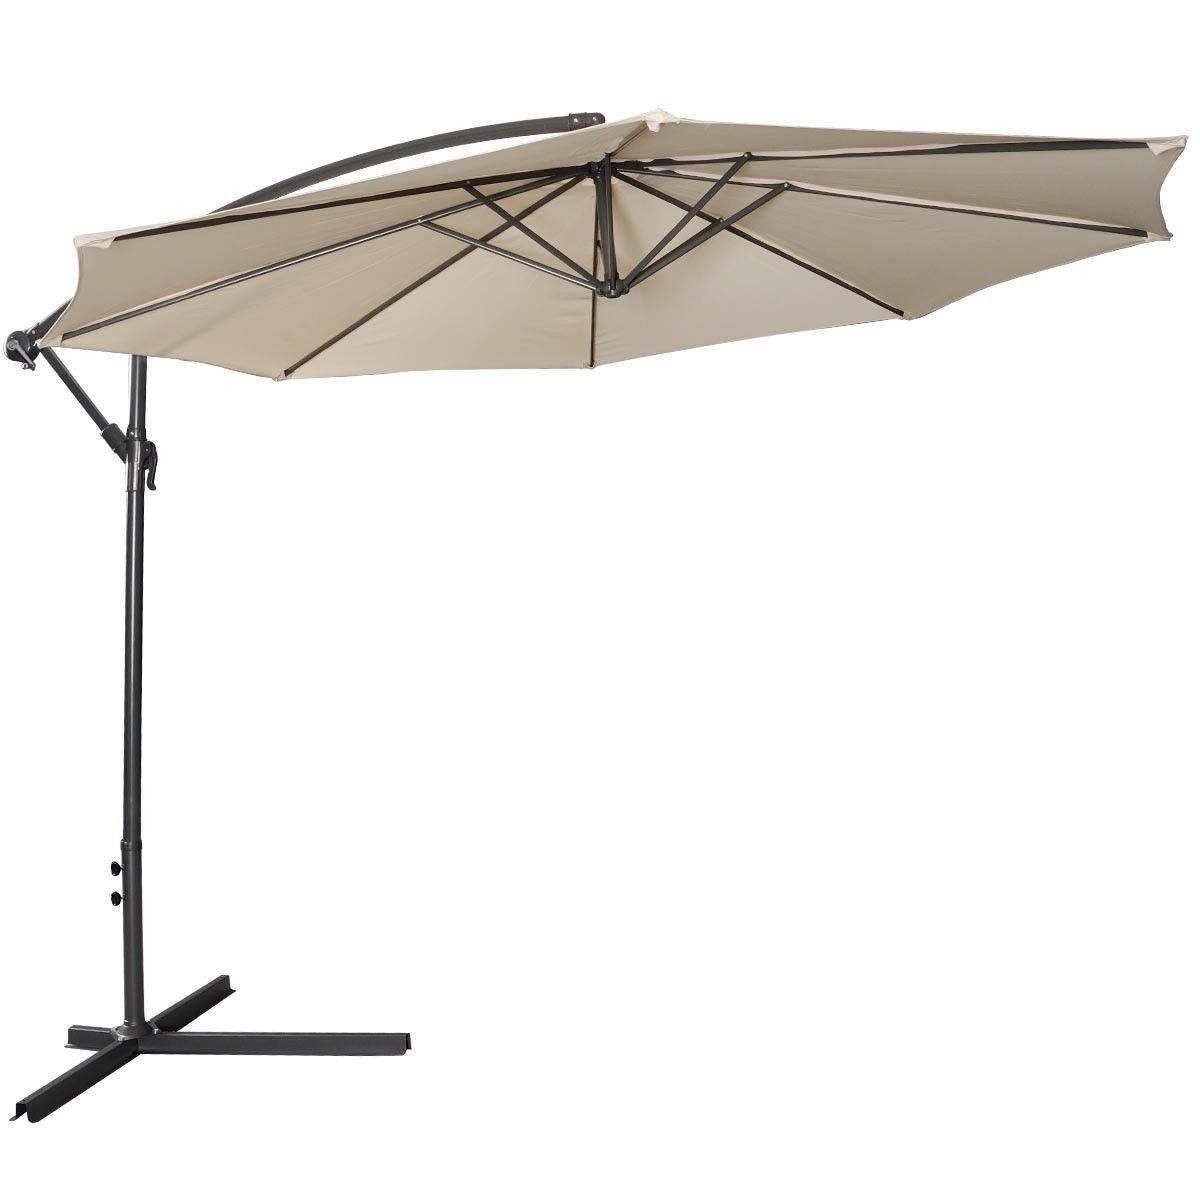 ConvenienceBoutique 10' Hanging Umbrella Patio Sun Shade Offset Outdoor Market W/ Cross Base